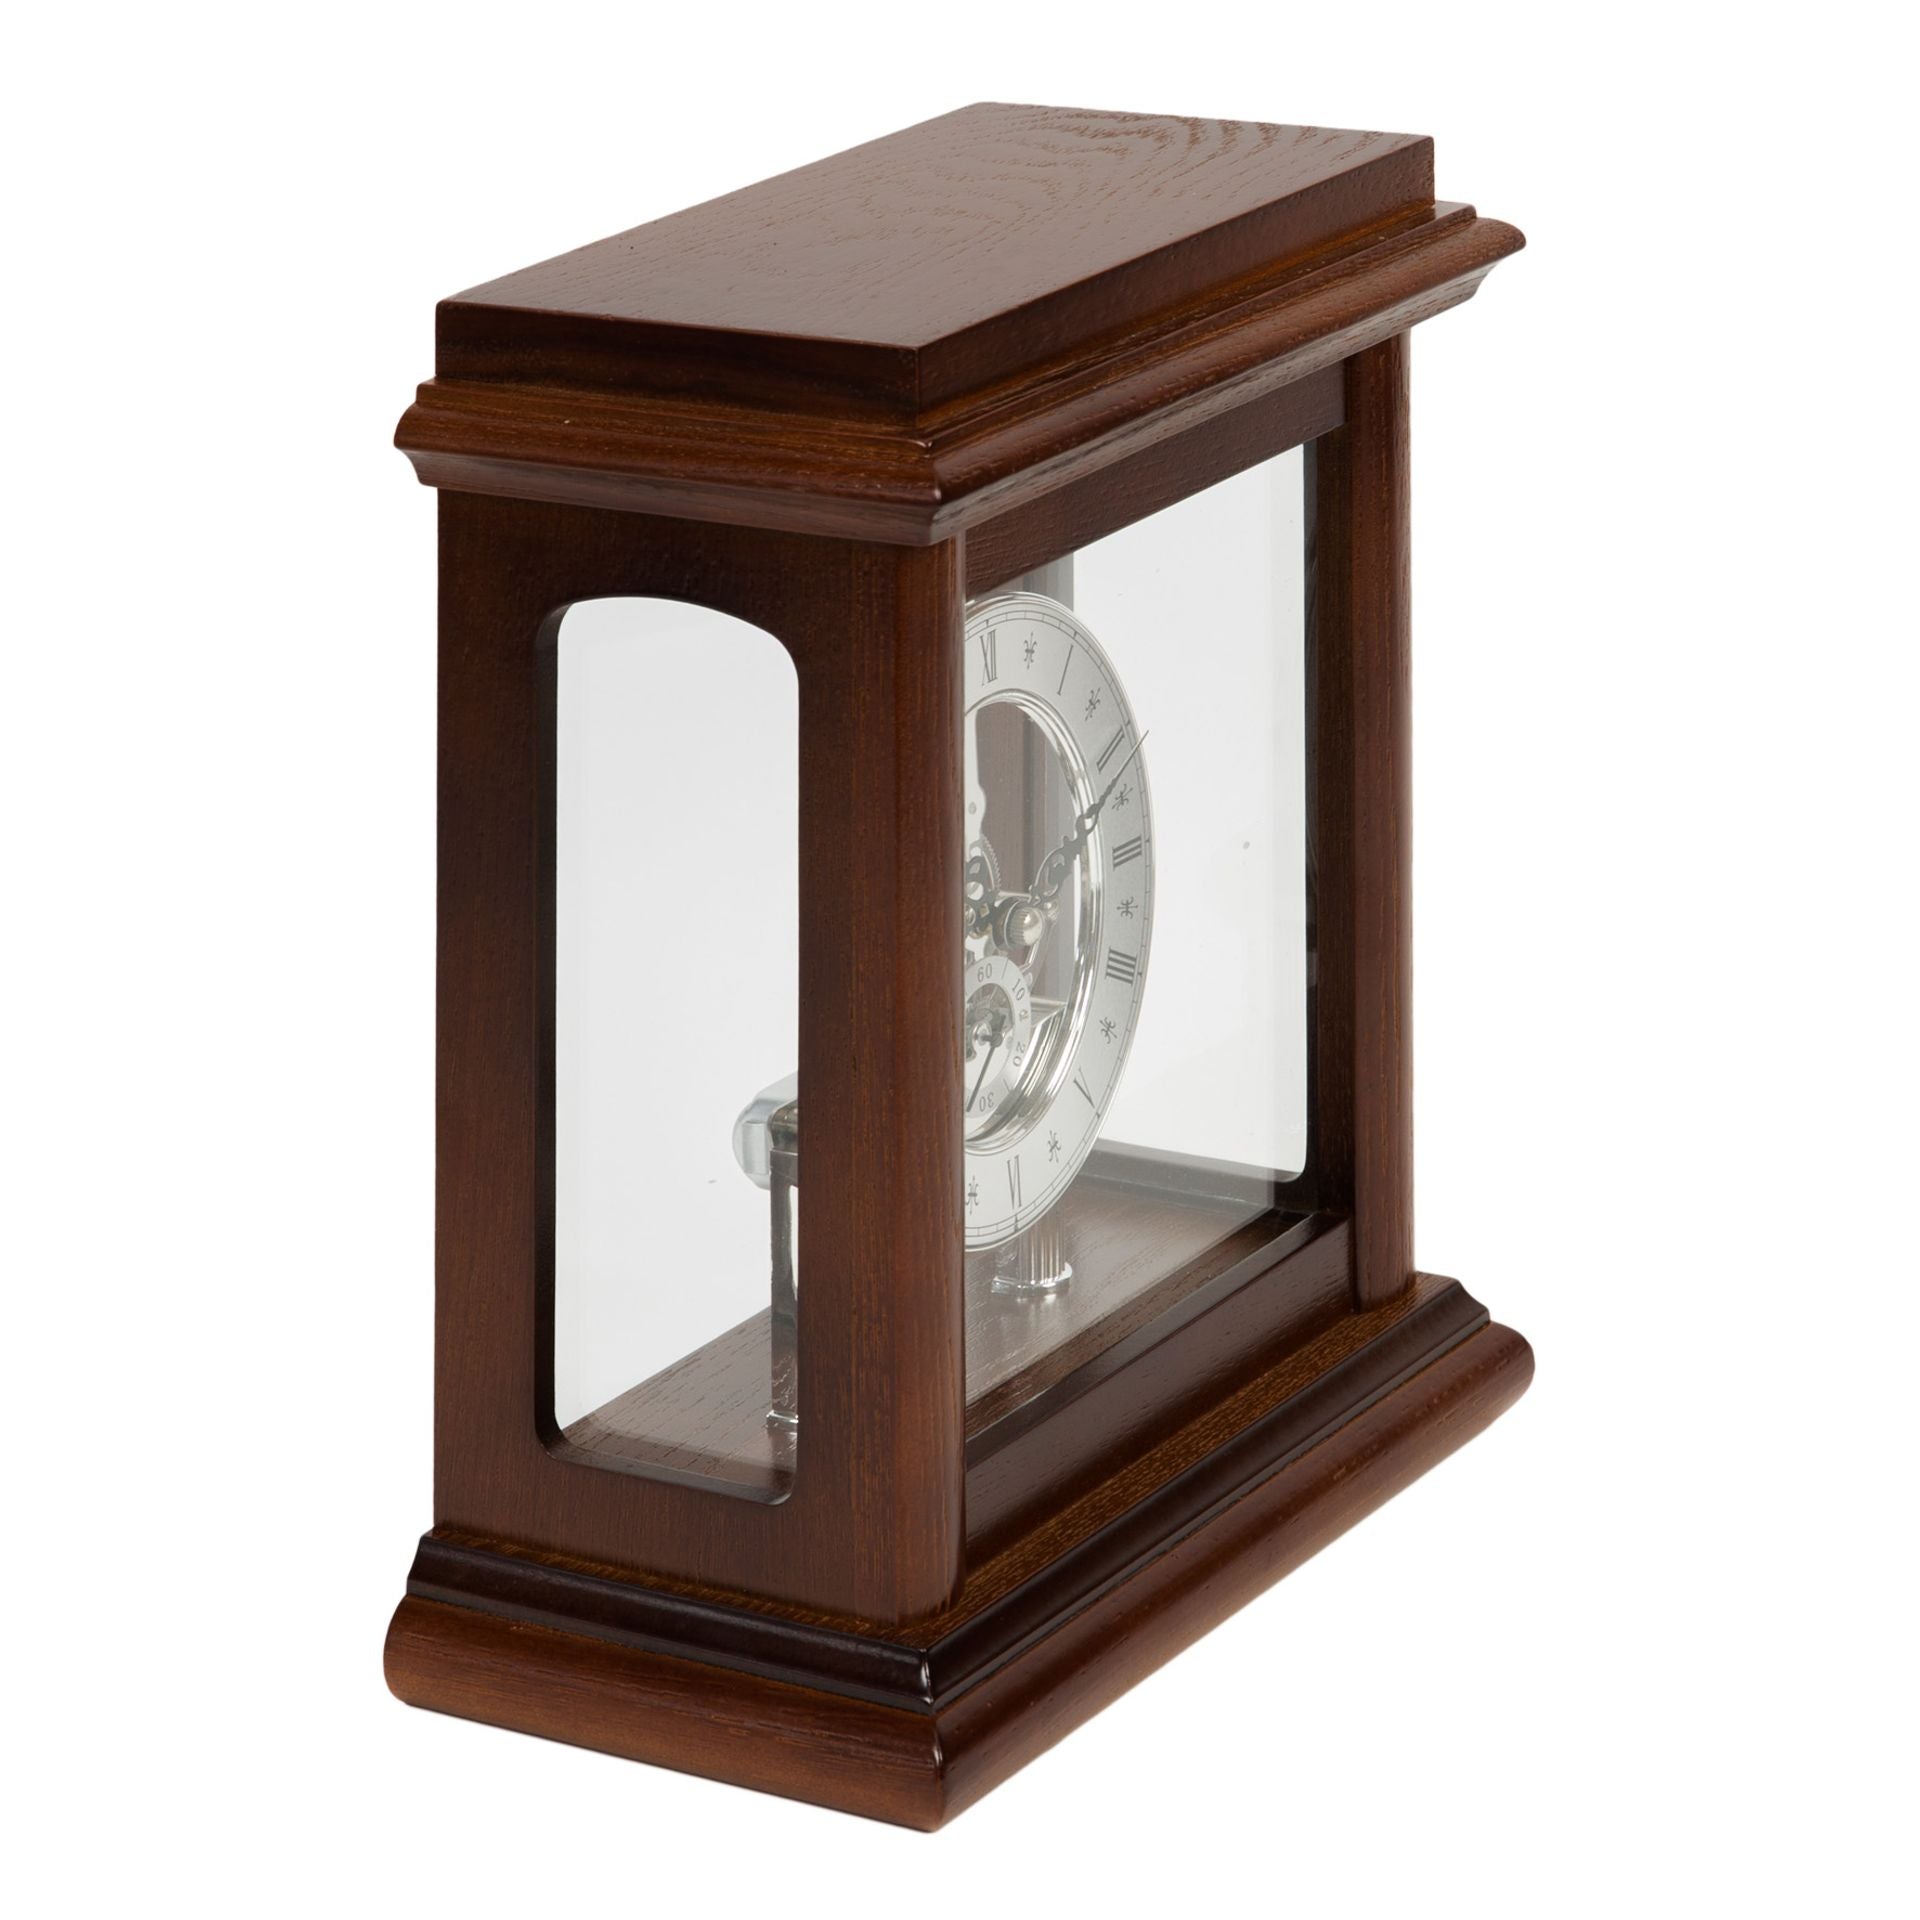 WM. Widdop Skeleton Movement Wooden Mantel Clock 26cm